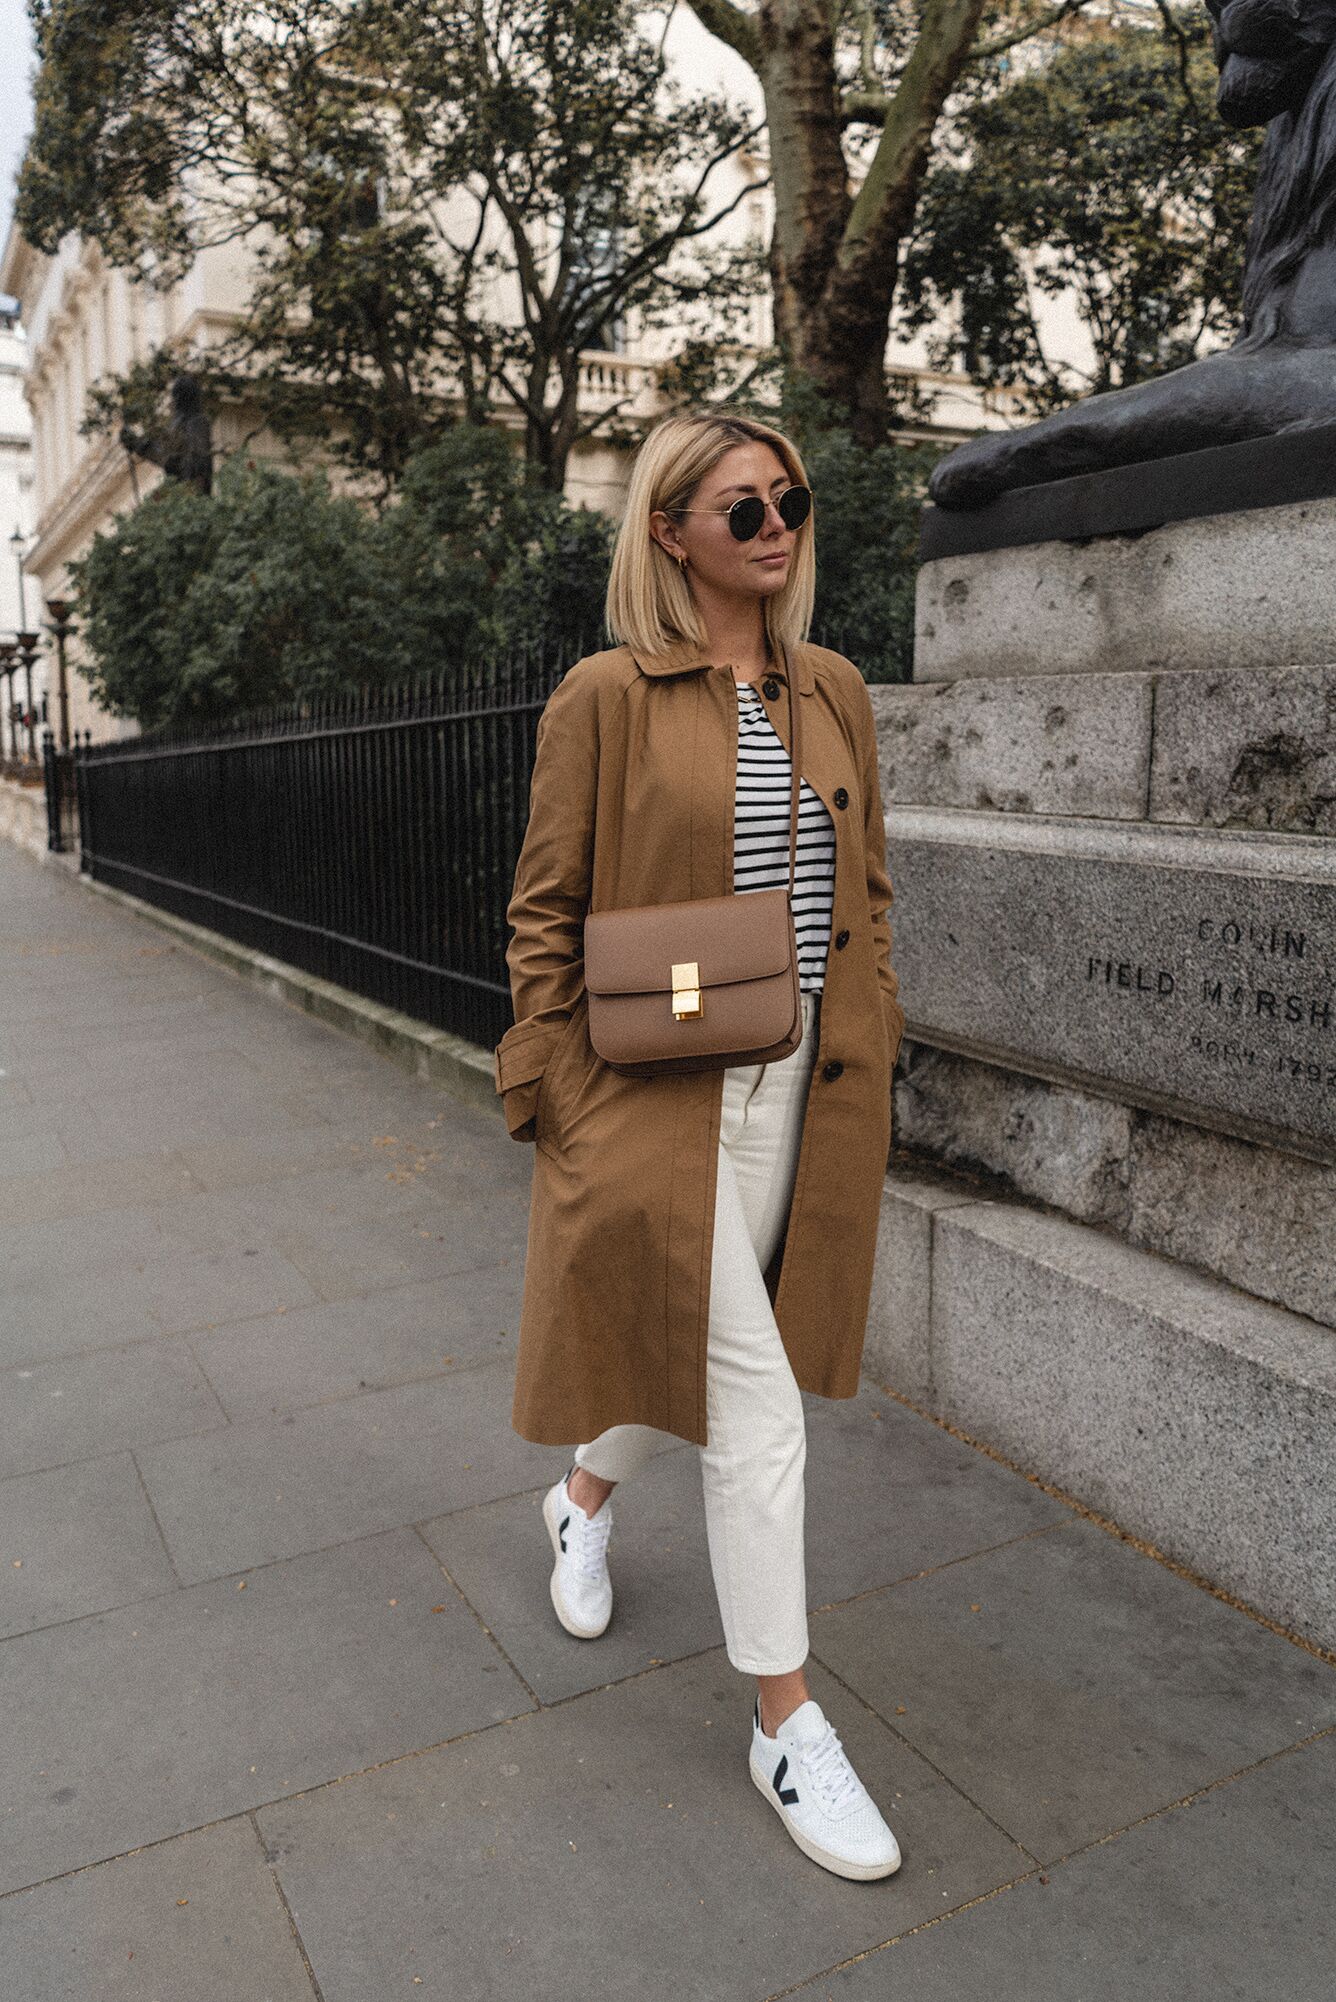 Emma Hill style, tan mac coat, stripe t shirt, white jeans, Veja V-10 trainers, Celine Box Bag, chic Spring outfit Source: https://emmajhill.com/im-back/